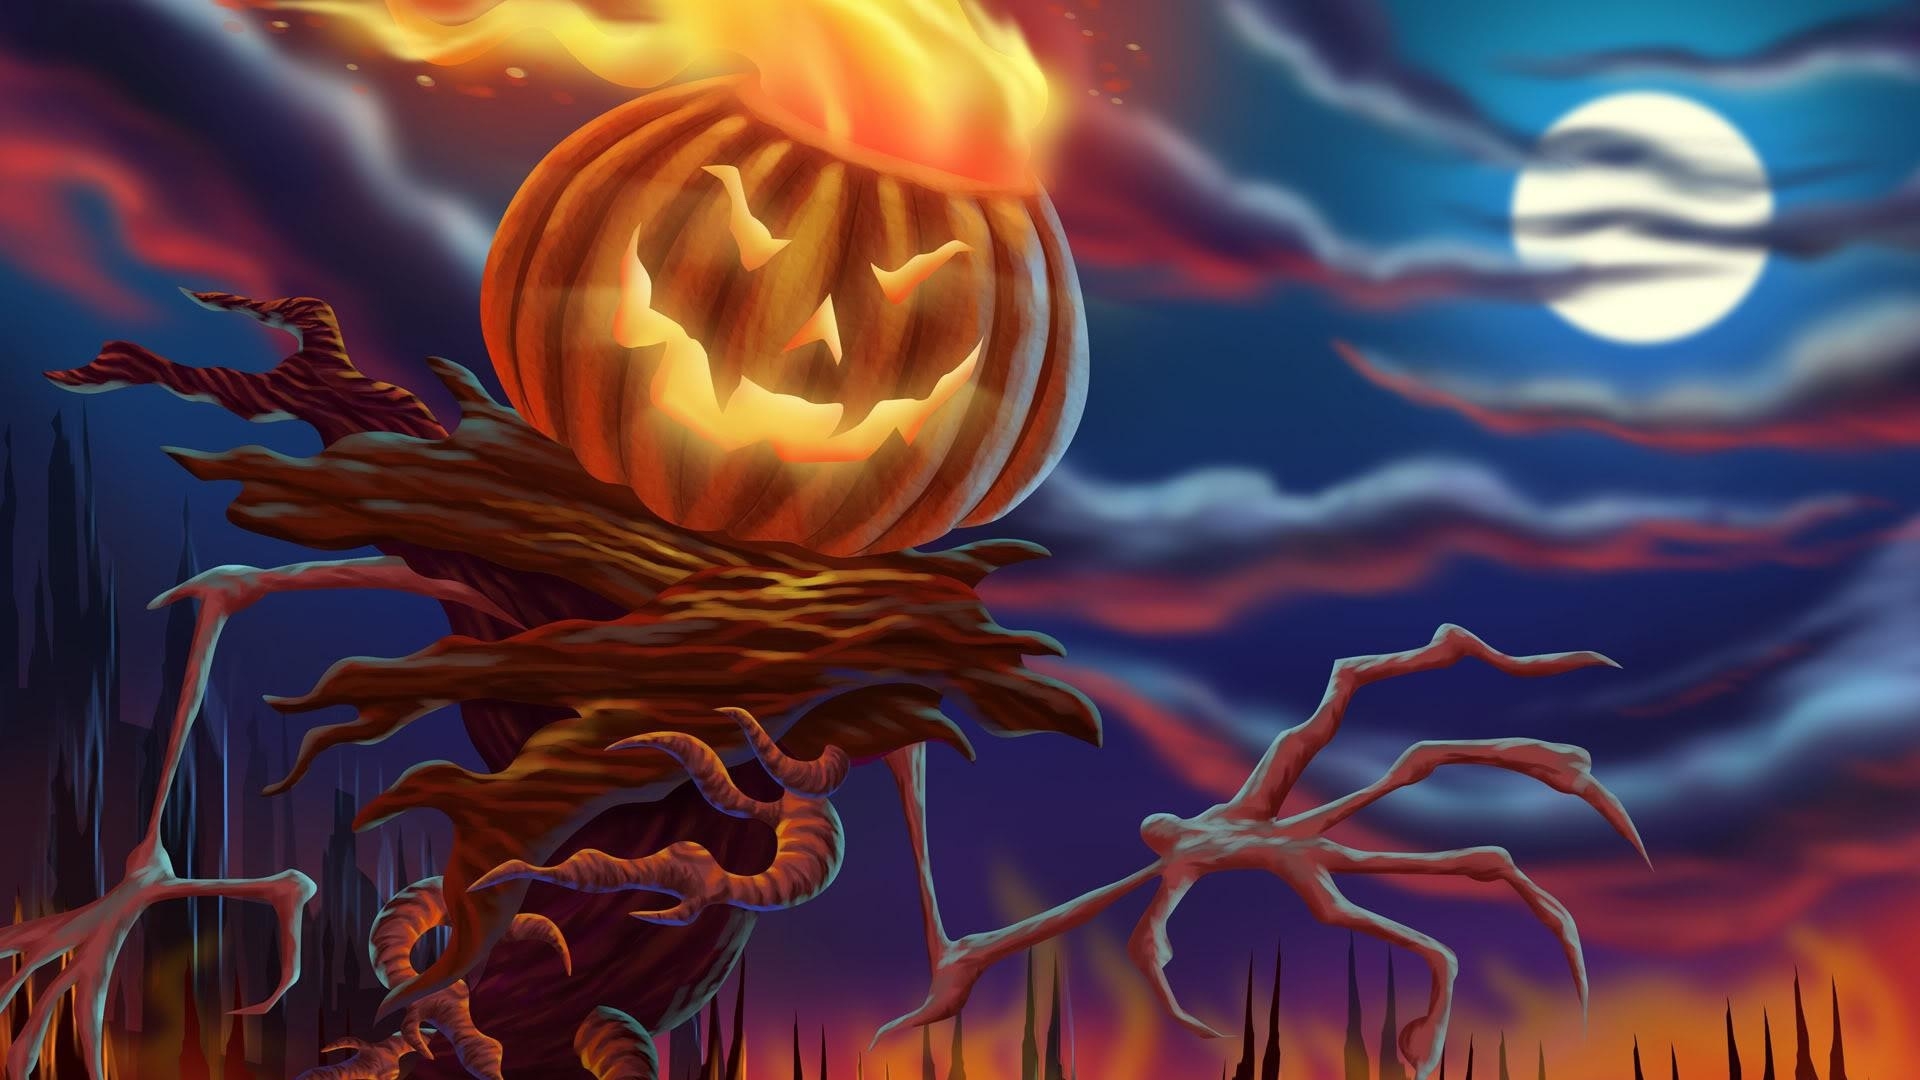 Halloween Digital Illustration for 1920 x 1080 HDTV 1080p resolution